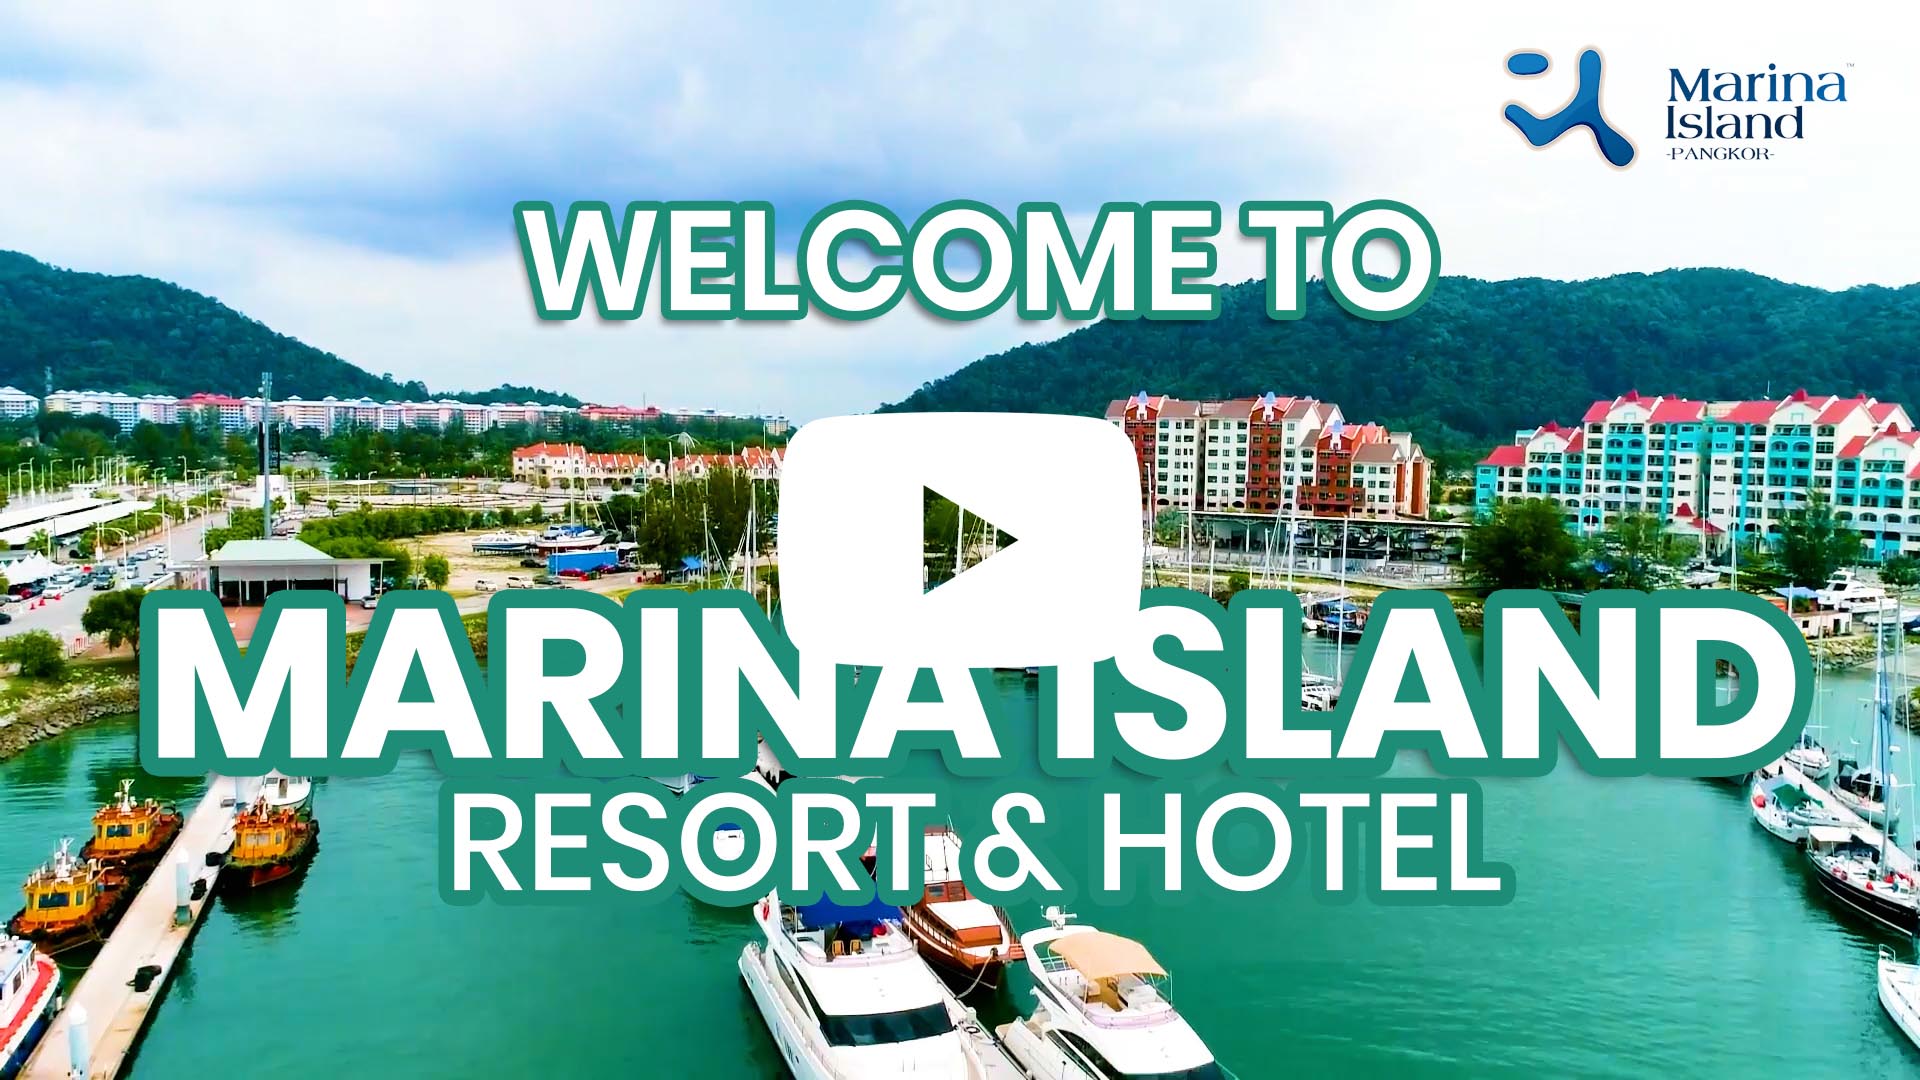 Marina Island Pangkor Resort & Hotel Video